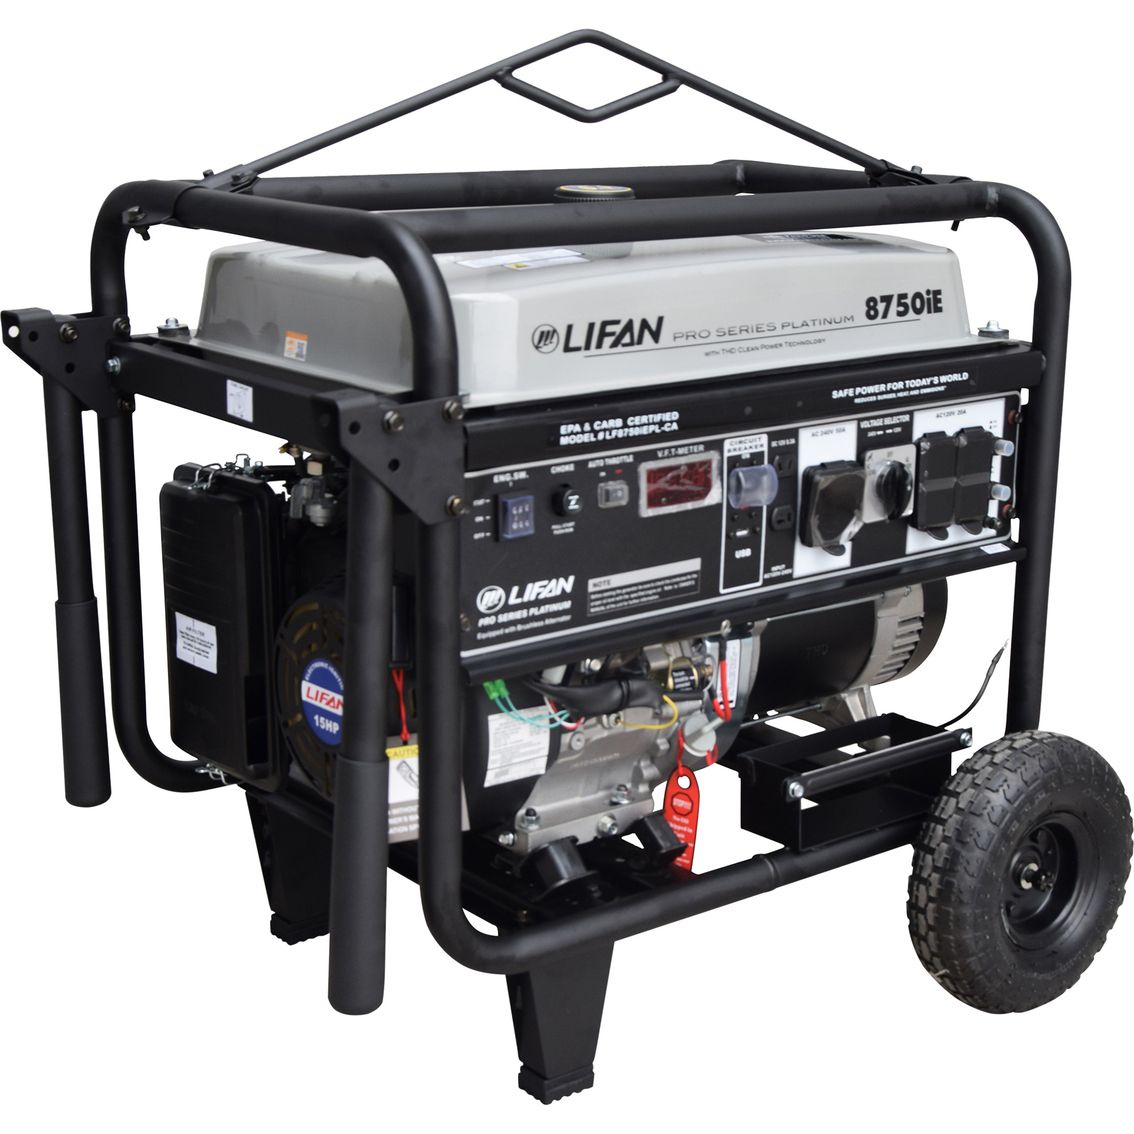 Lifan 8500W Platinum Generator - Image 1 of 2